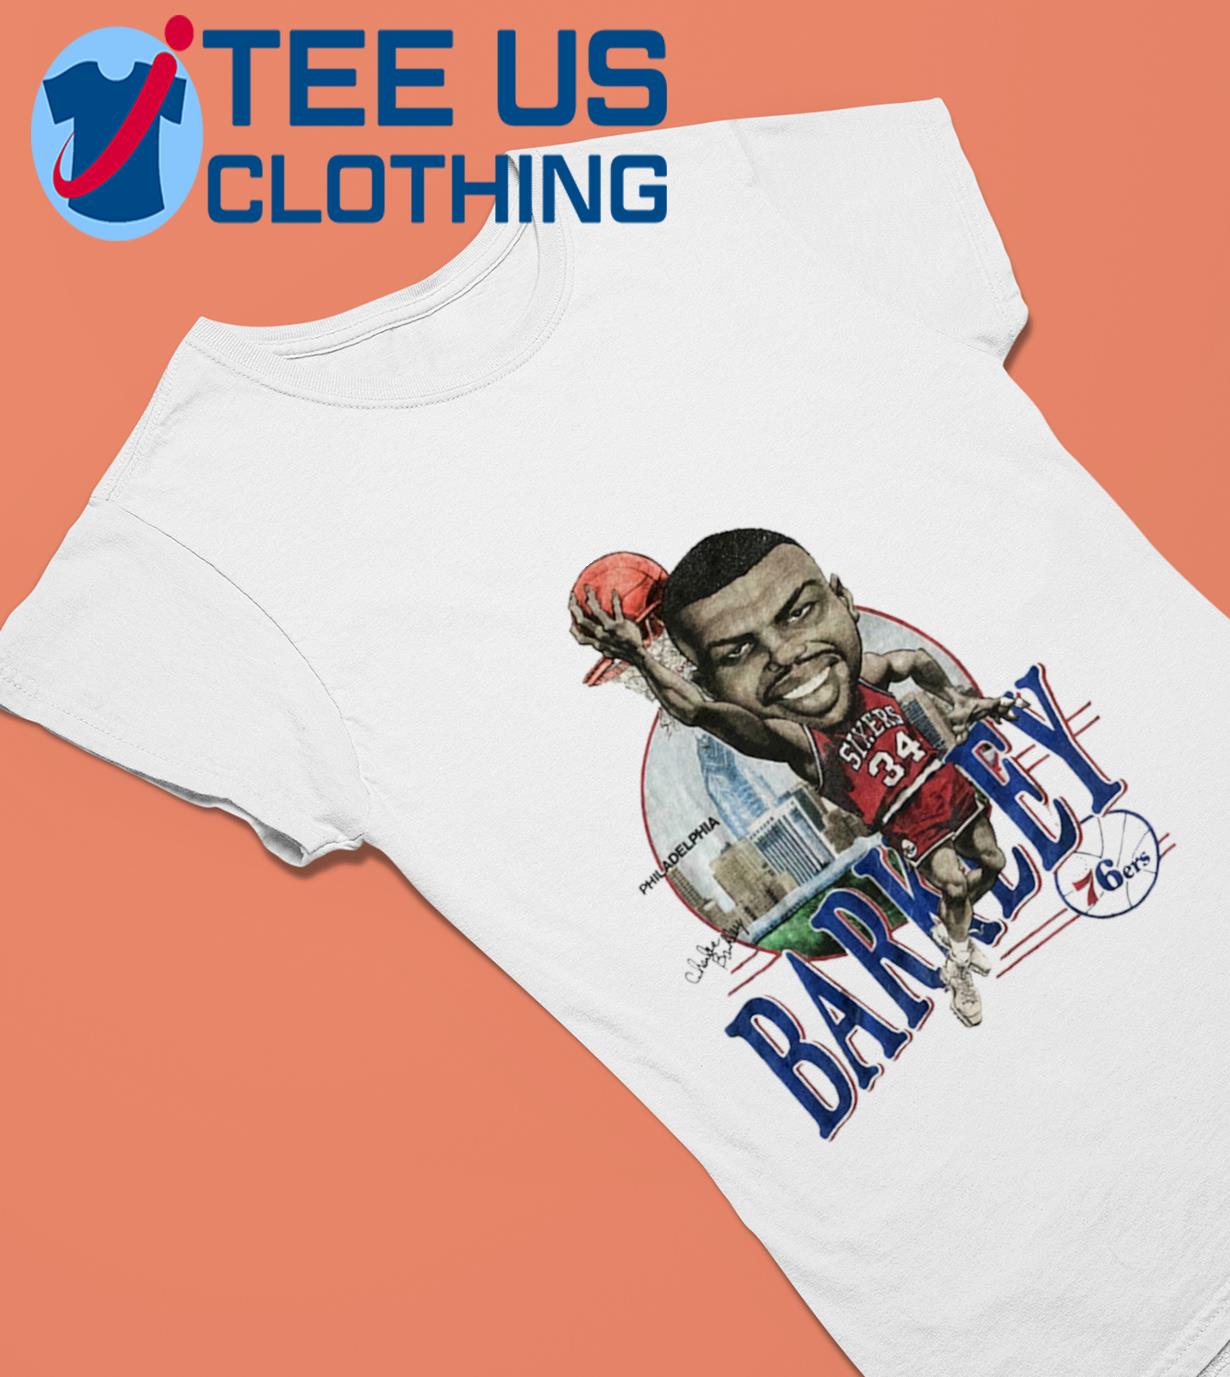 Charles Barkley Philadelphia 76ers Caricature 80s Shirt